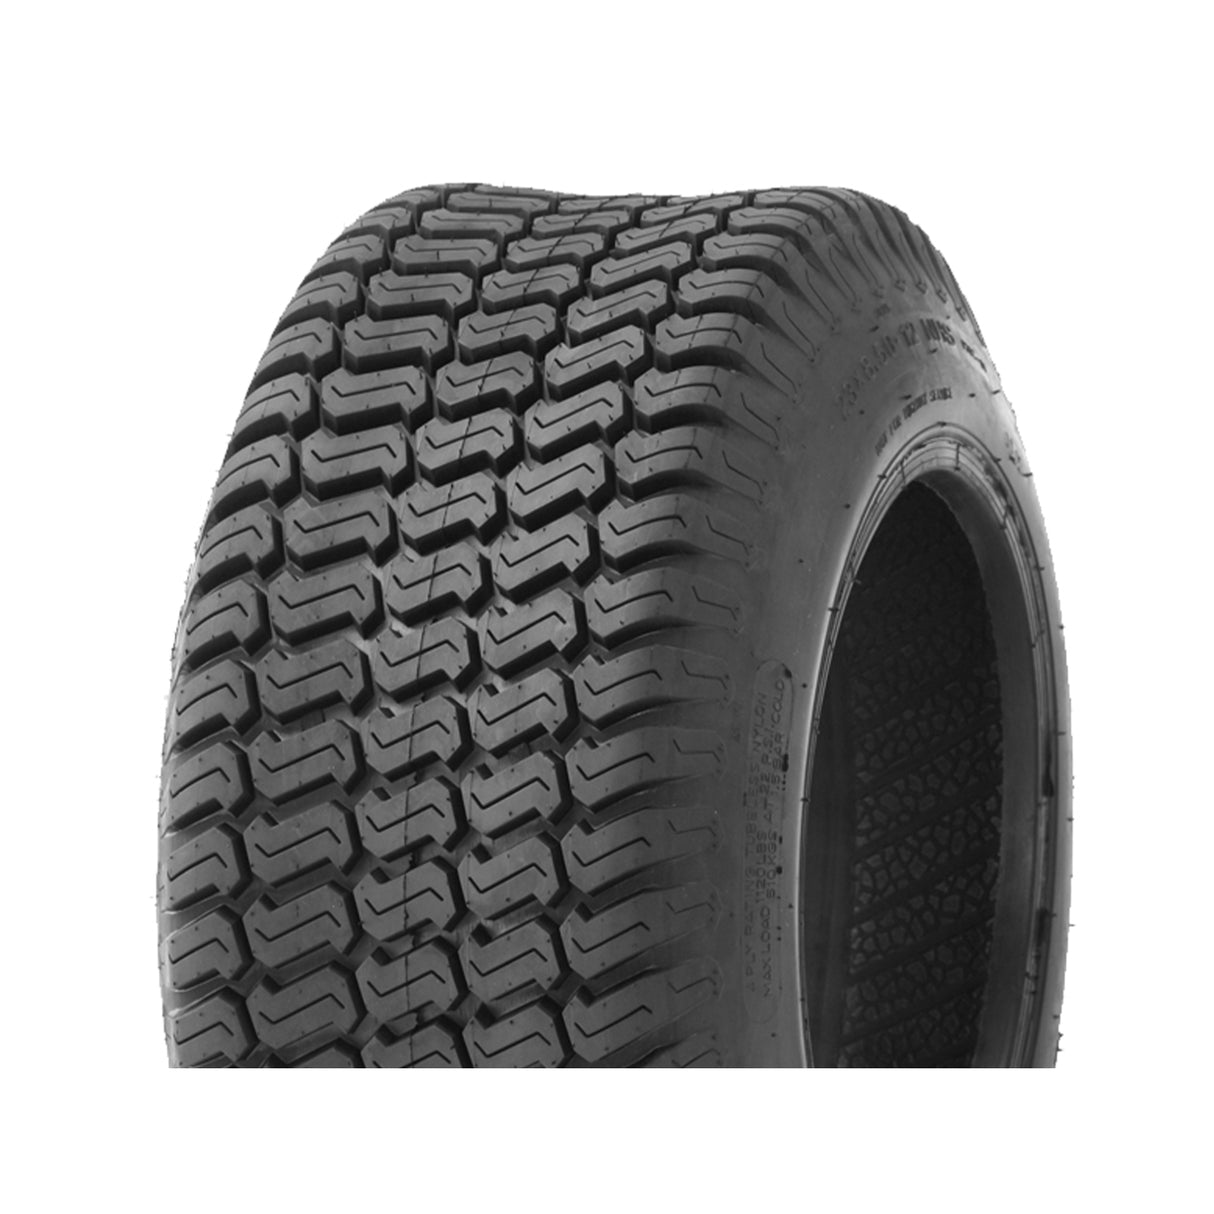 18x9.50-8 P332 (6 PLY) Wanda Turf/Mower Tyre - GEO Tyres Online